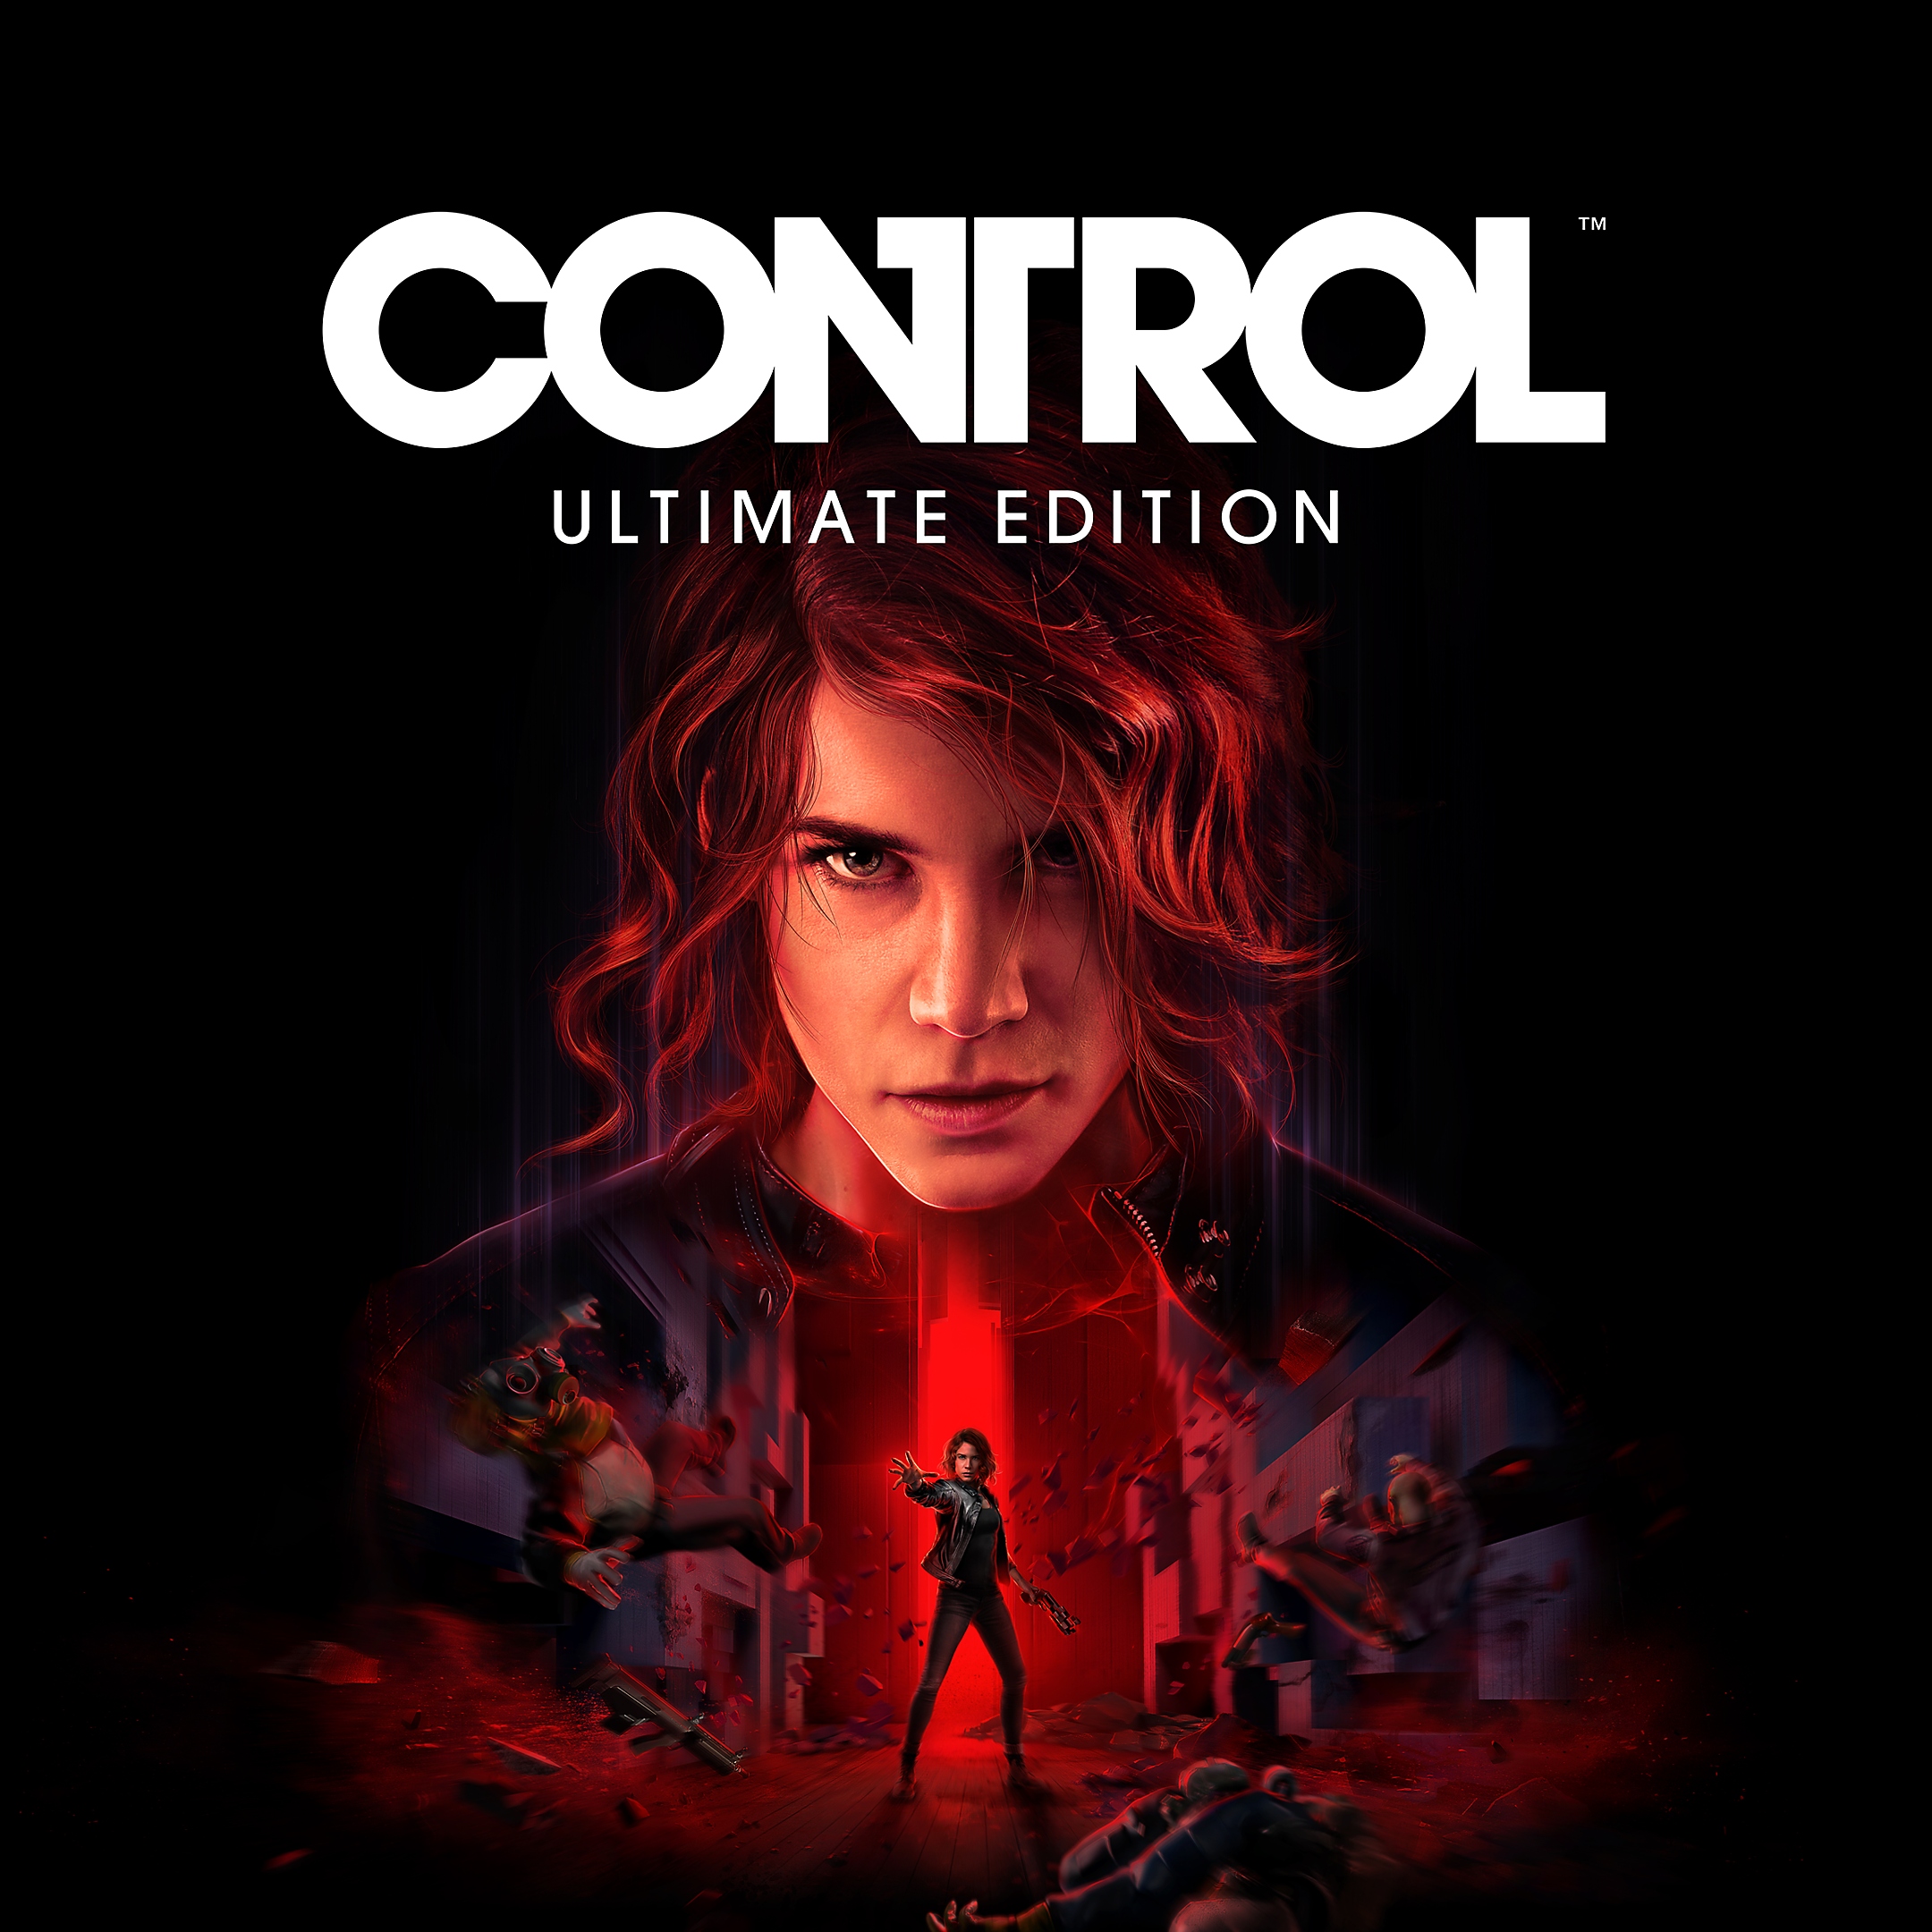 Control: Ultimate Edition - key art